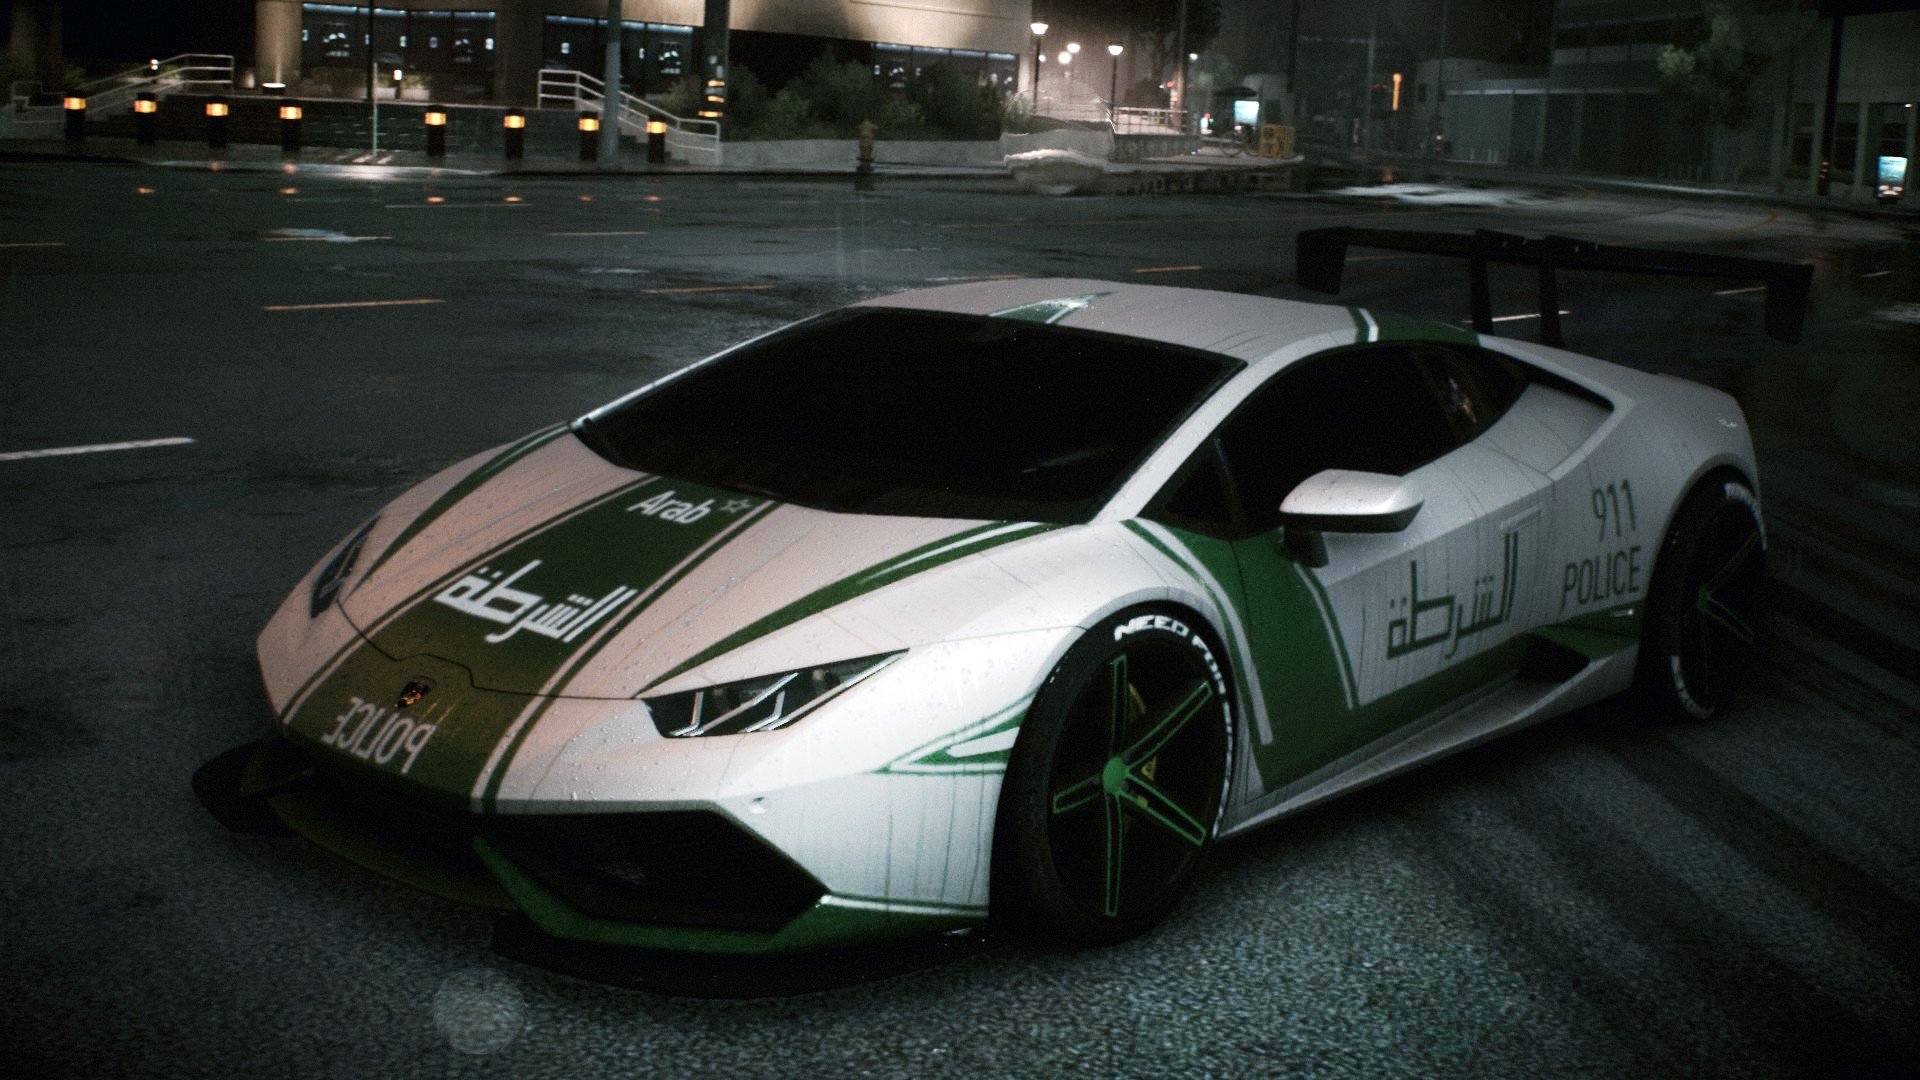 police, Arabian, Lamborghini, Dubai, Need for Speed, Street, Car